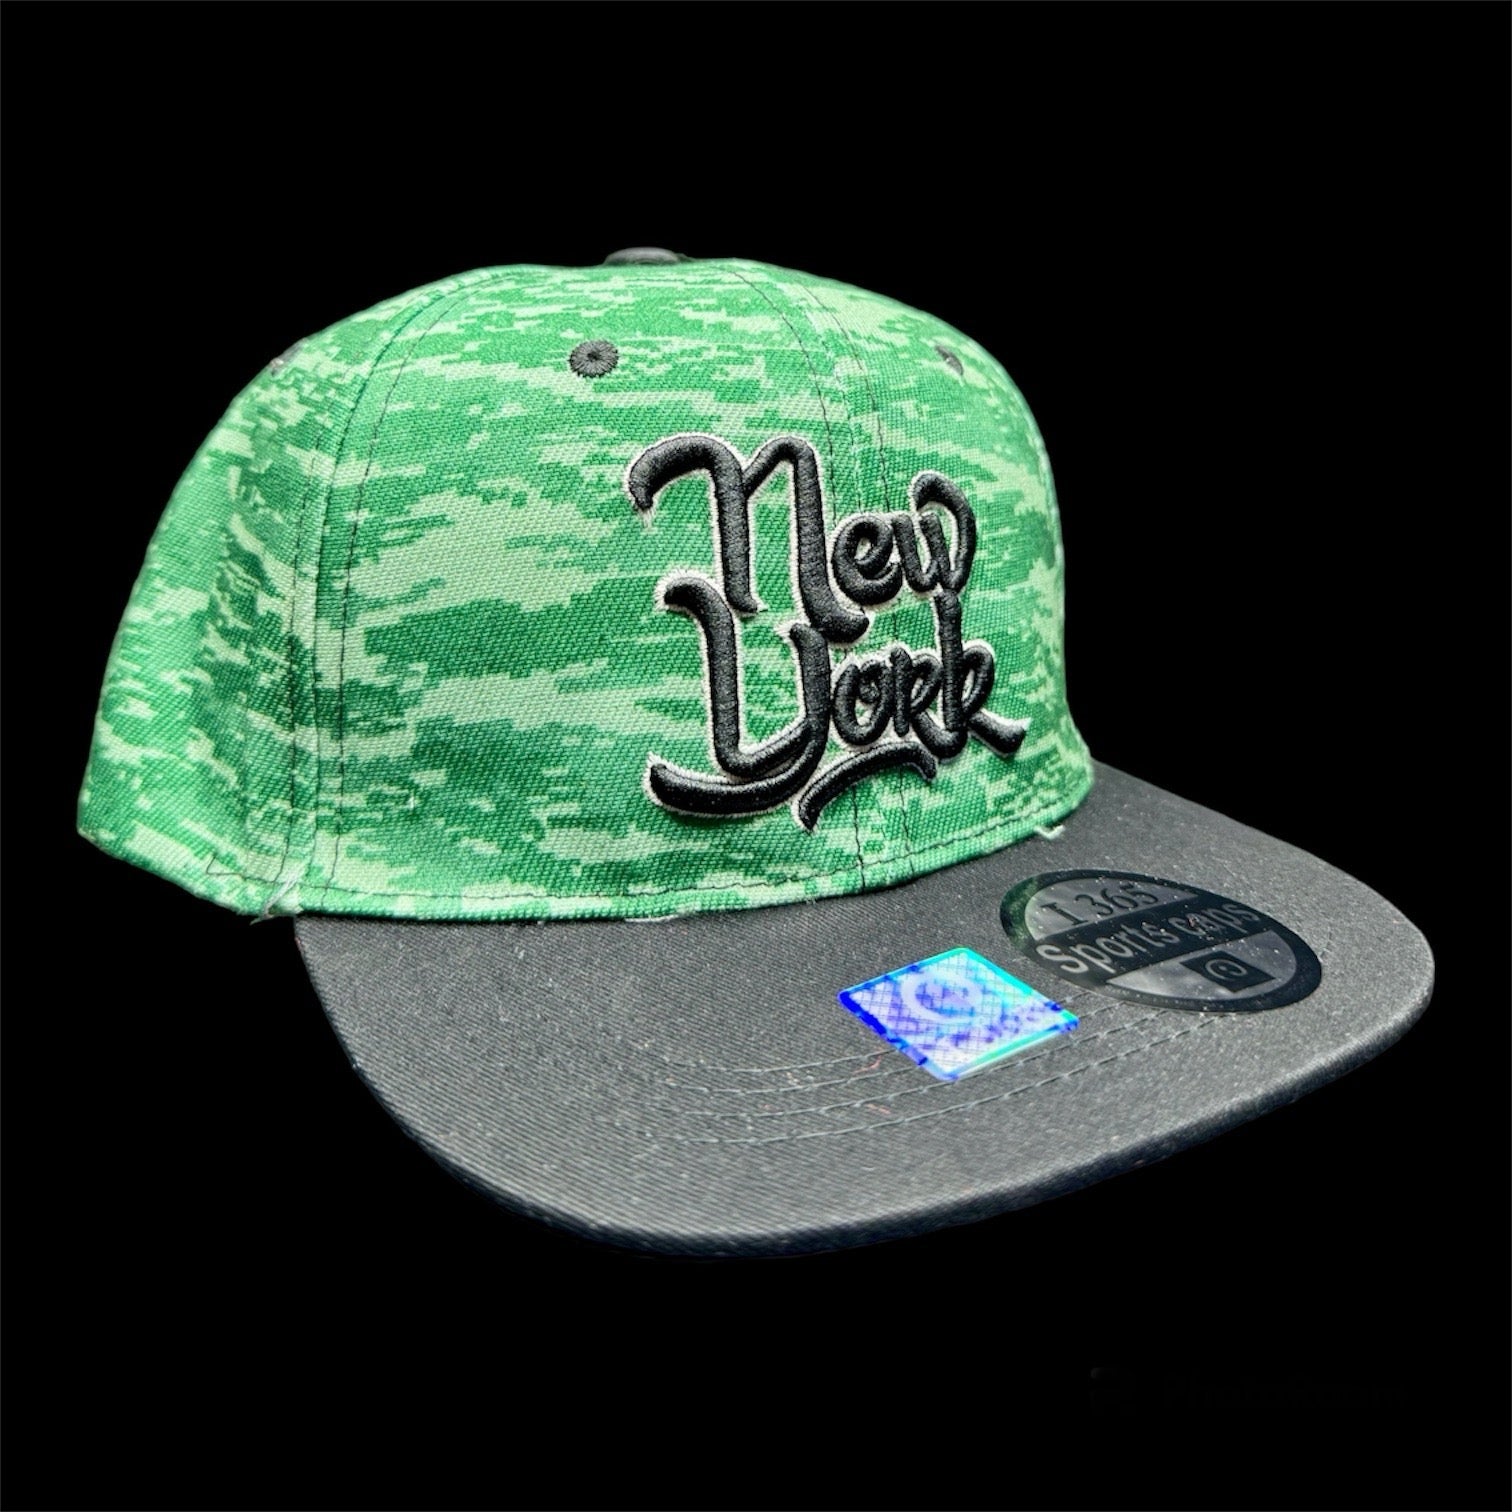 Green New York City Style Hat